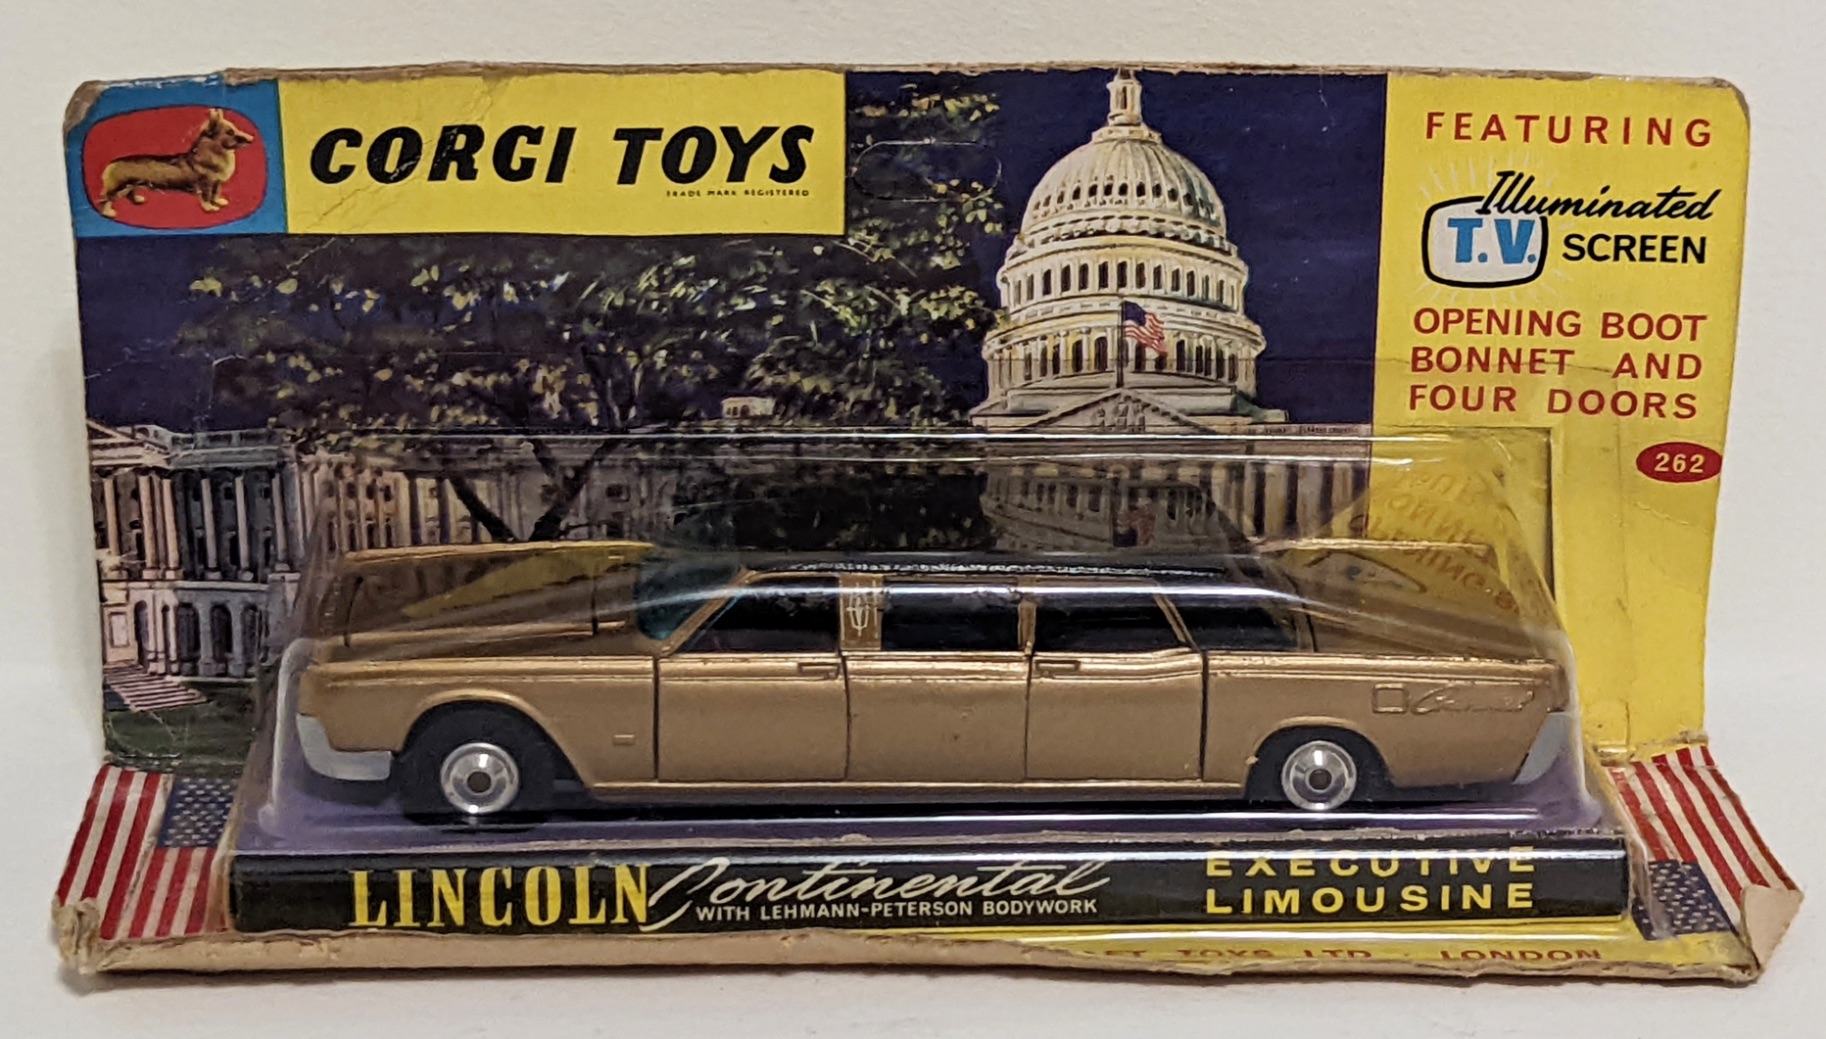 Corgi Toys Lincoln Continental Executive Limousine, no.262, 1/43 scale